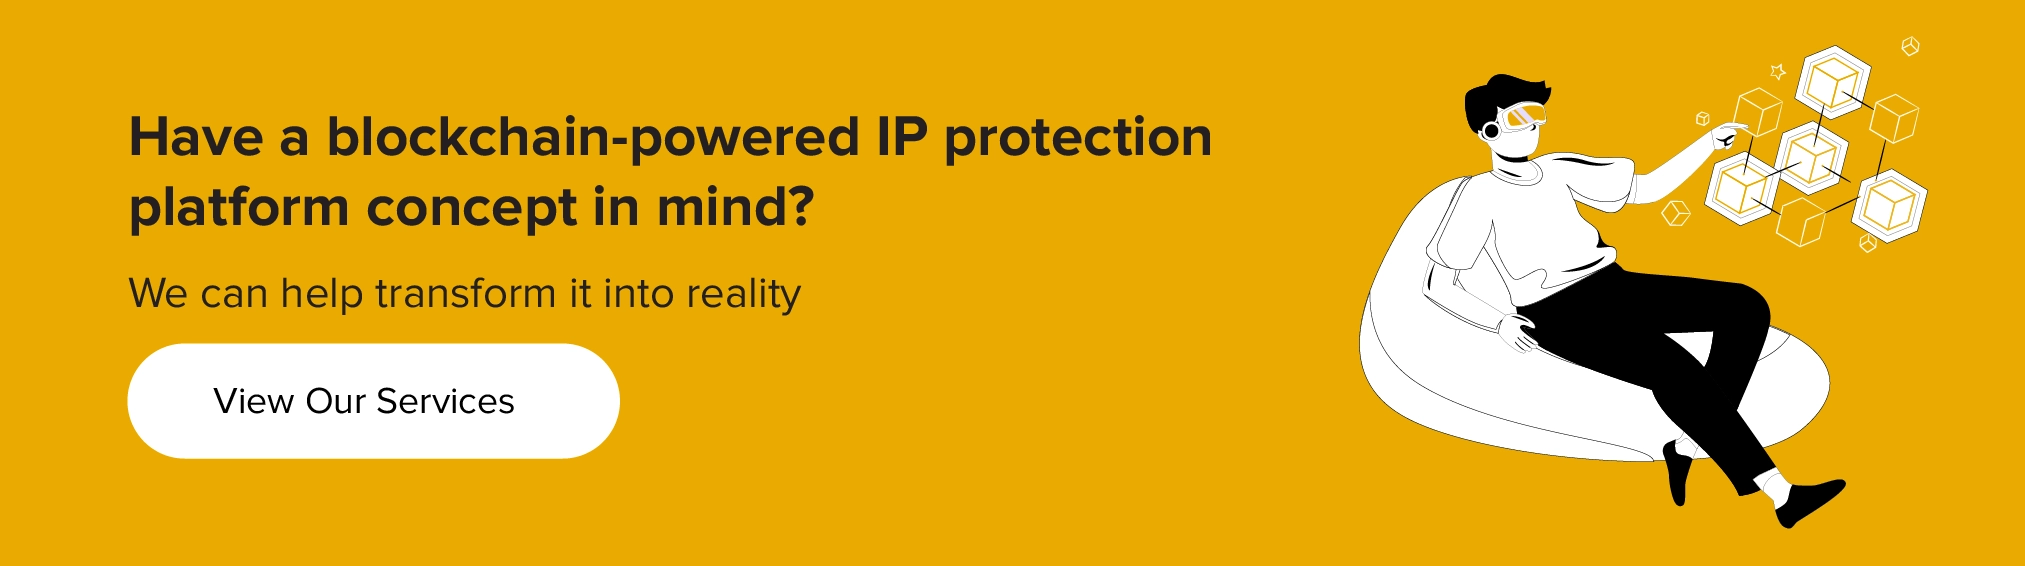 Blockchain-powered IP protection platform